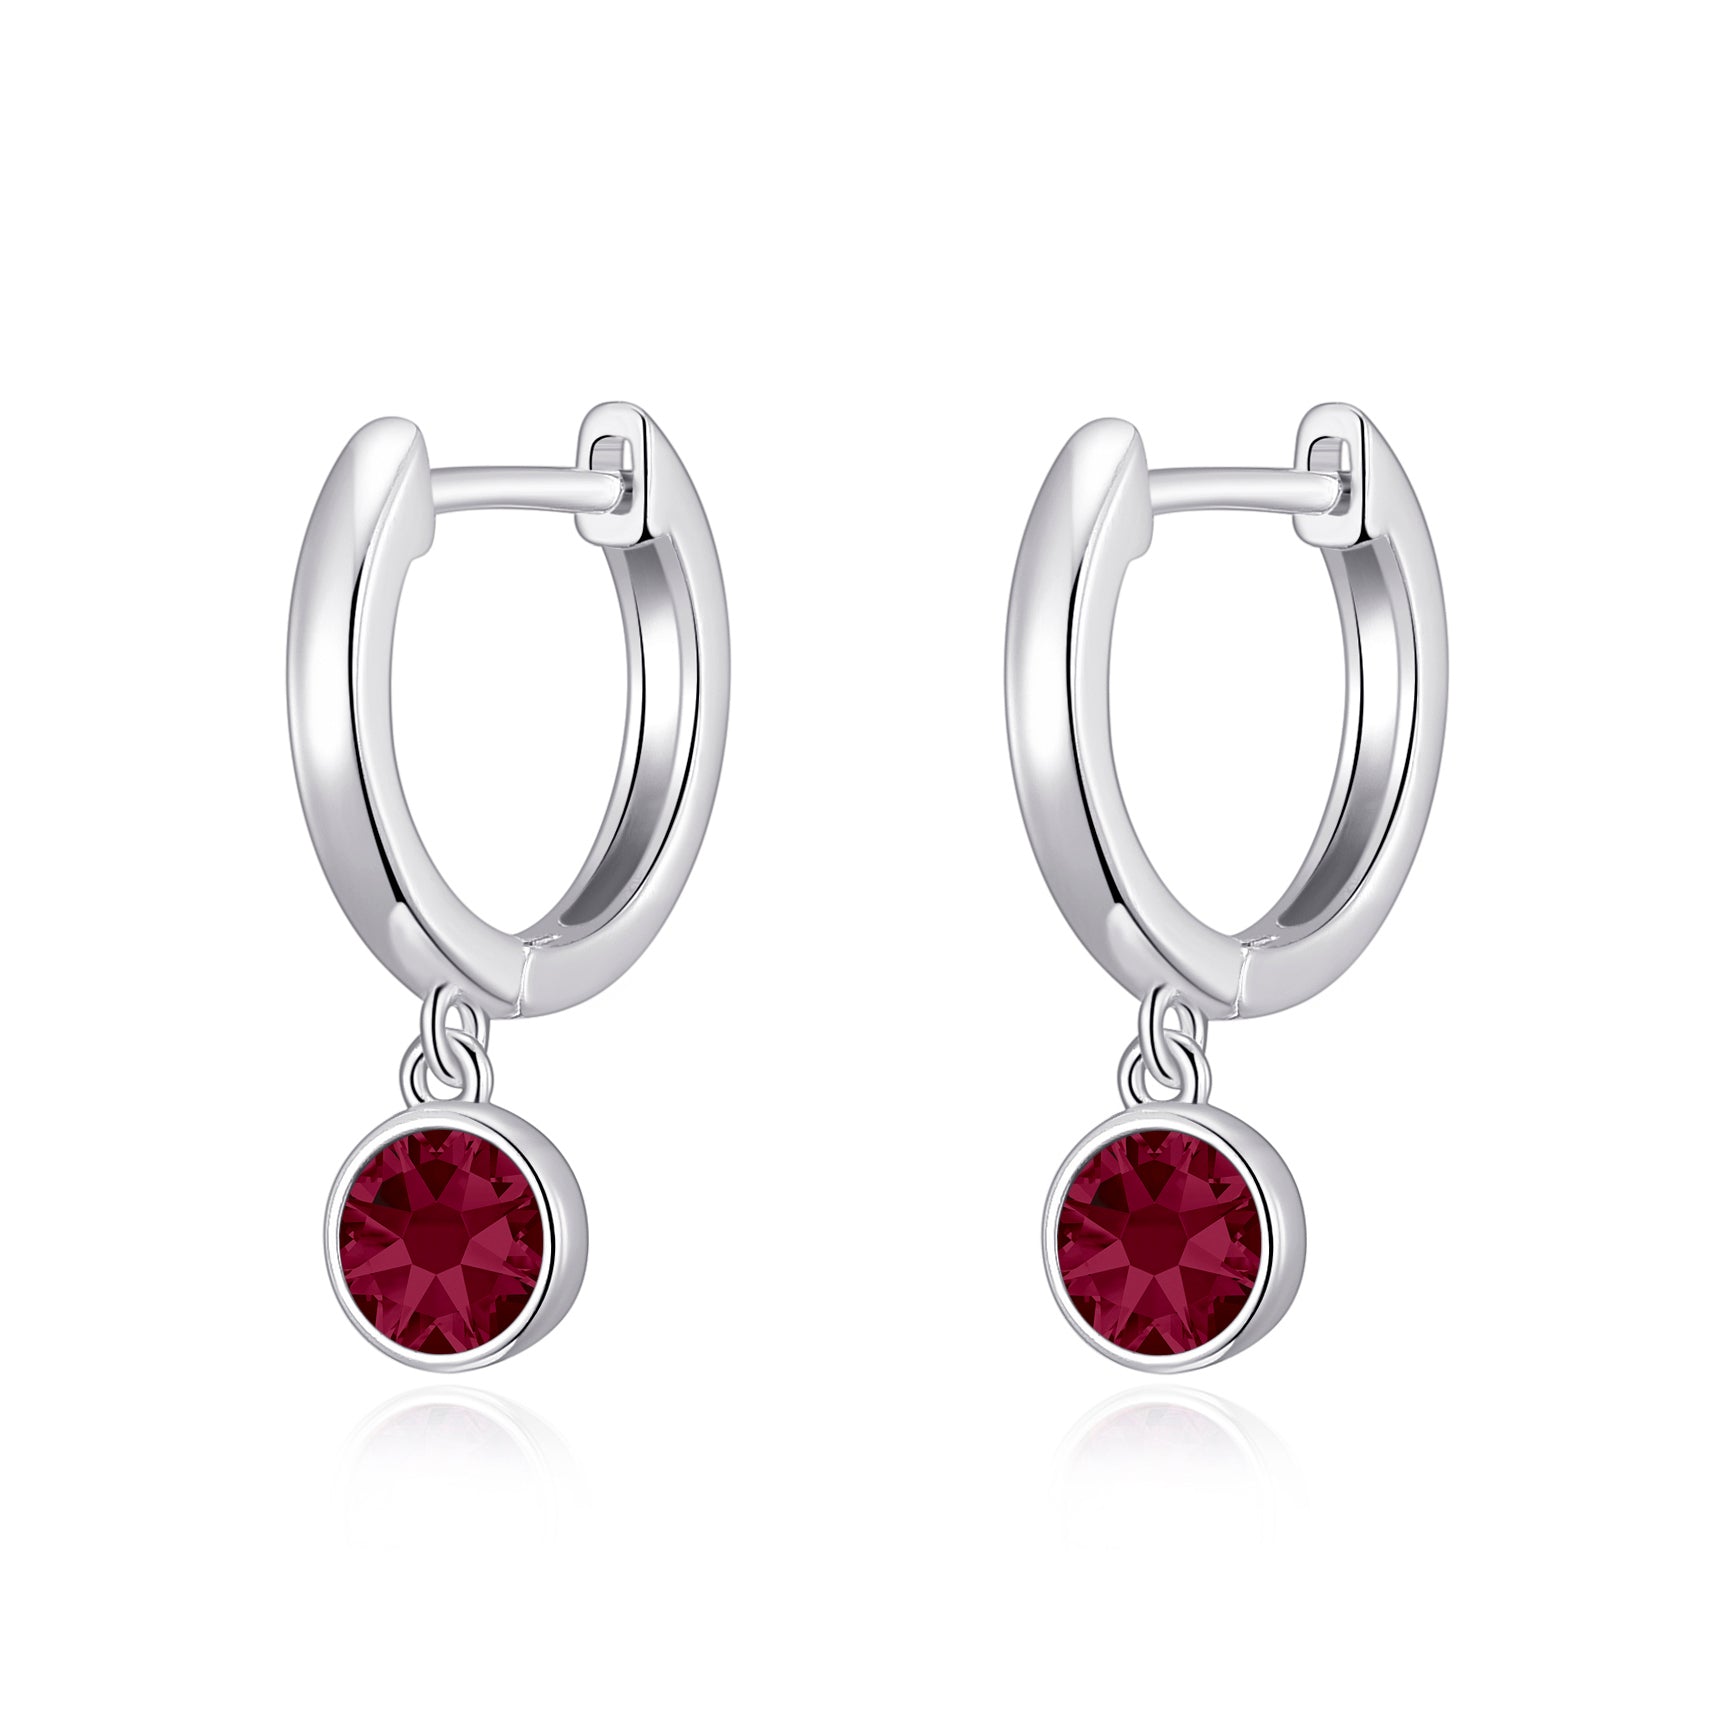 Red Crystal Hoop Earrings Created with Zircondia® Crystals by Philip Jones Jewellery